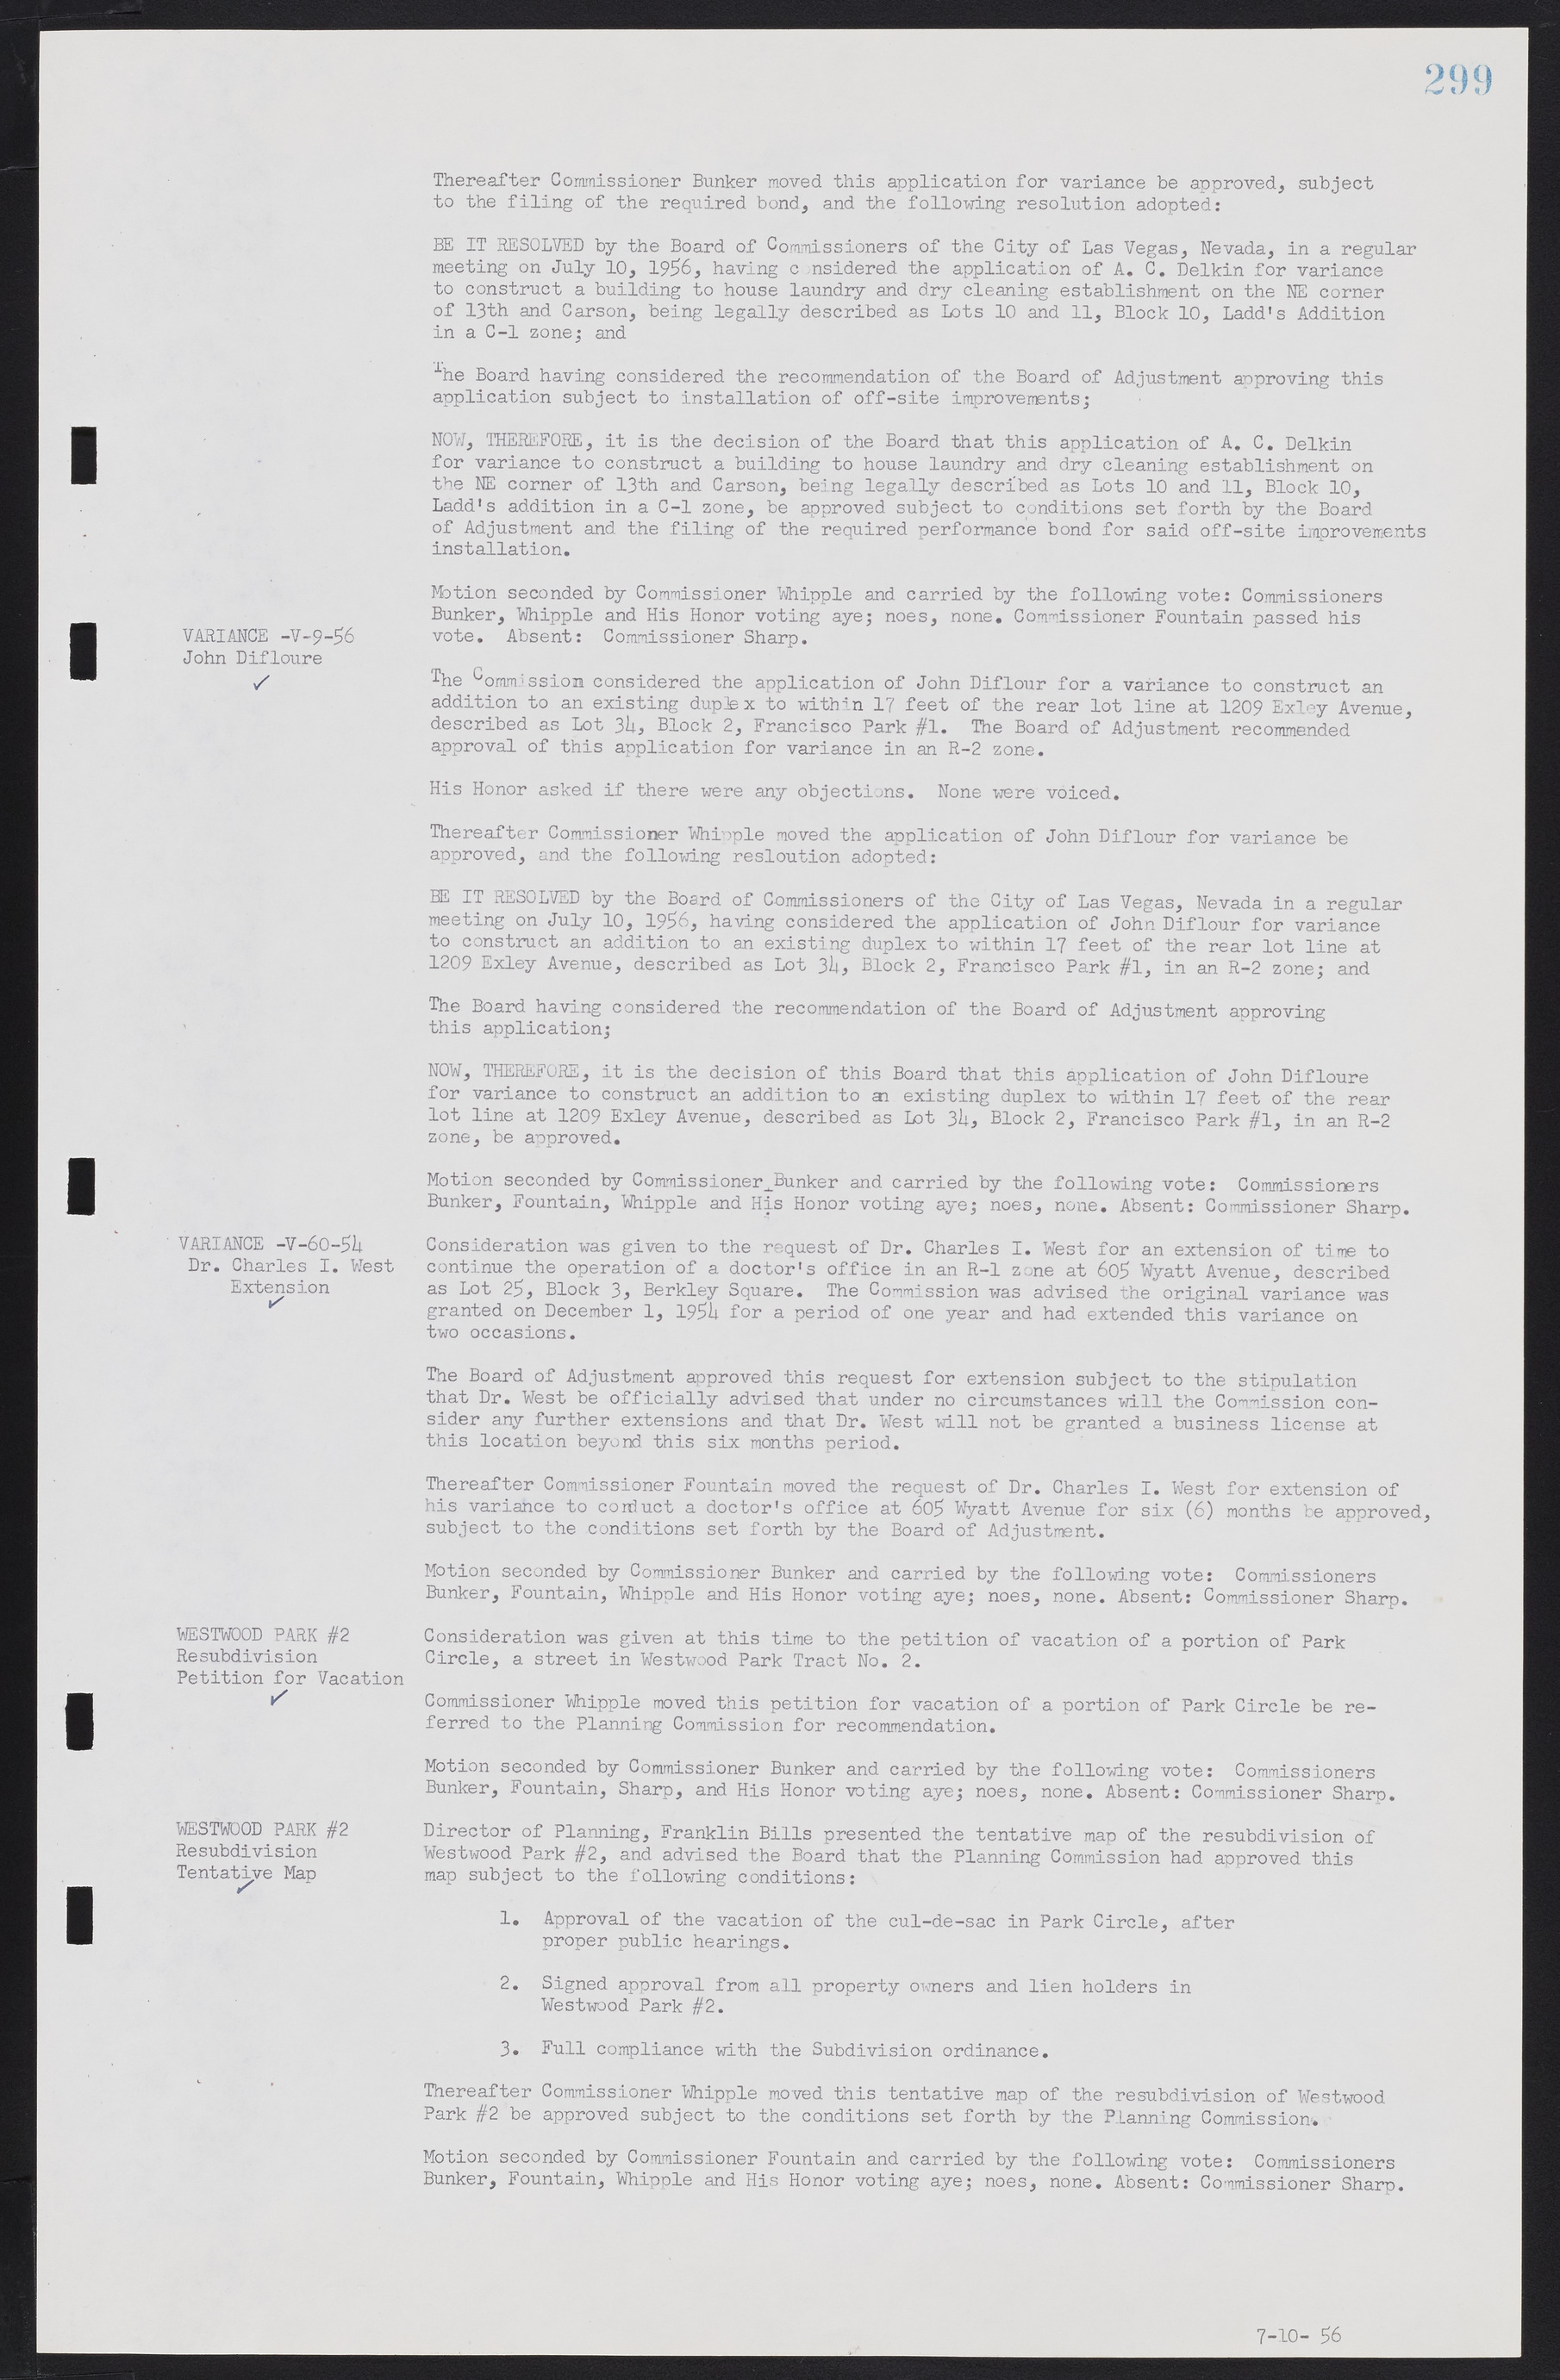 Las Vegas City Commission Minutes, September 21, 1955 to November 20, 1957, lvc000010-319